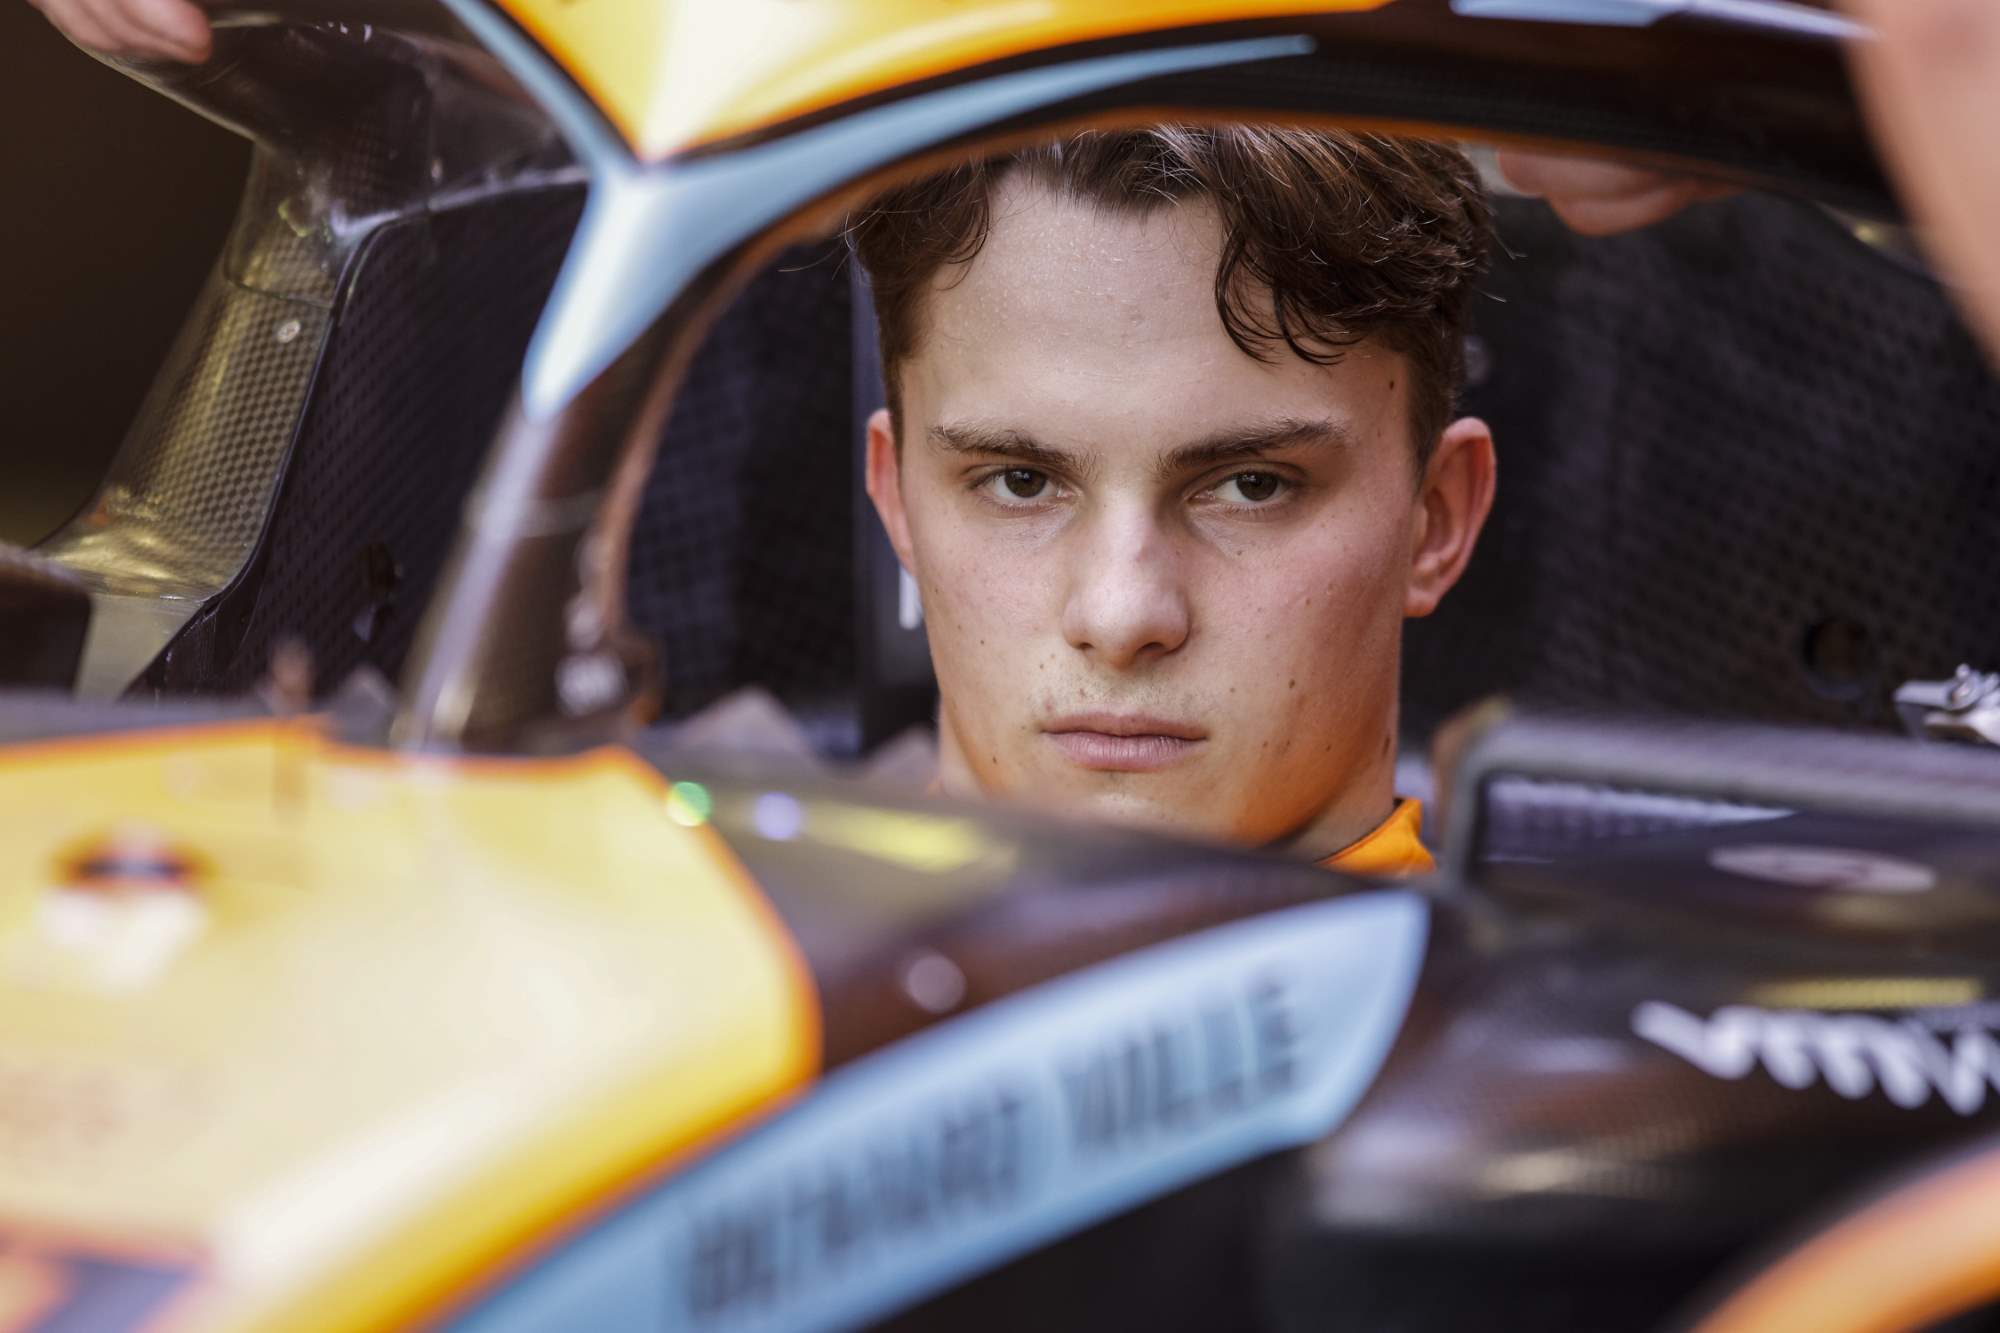 Oscar Piastri in his orange McLaren